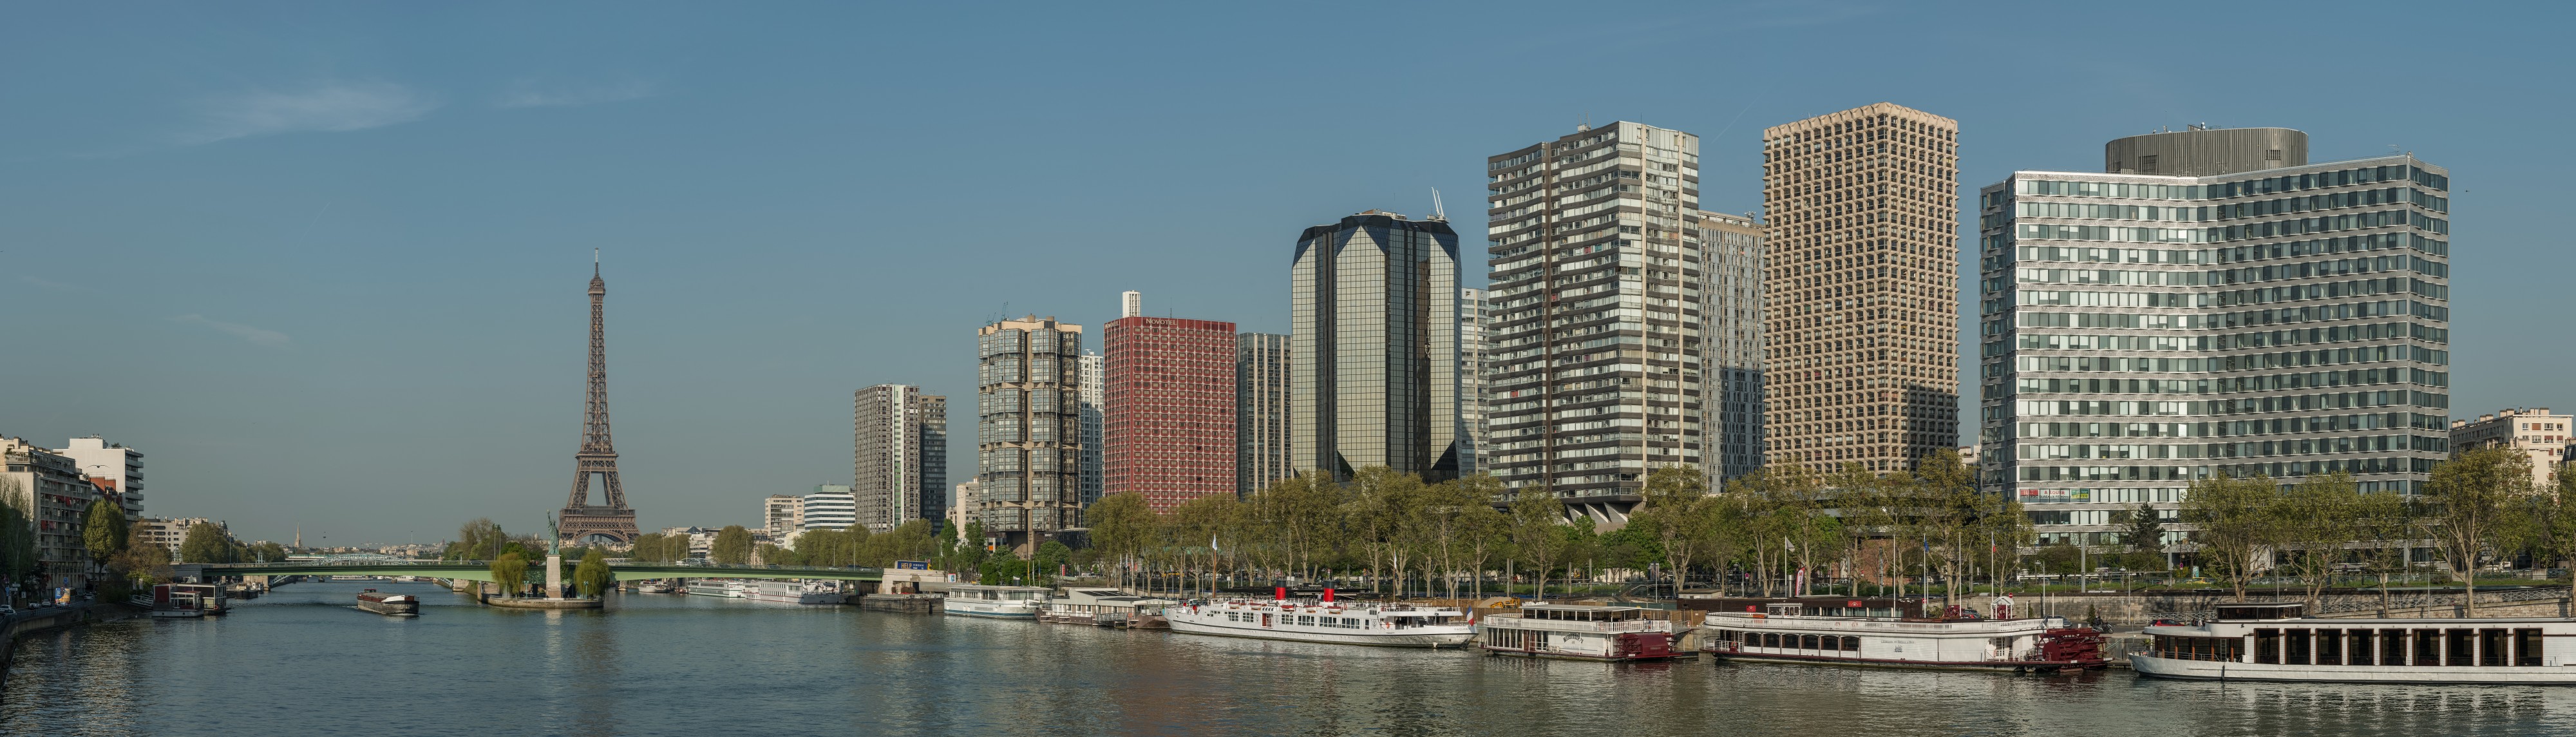 Front de Seine as seen from Pont Mirabeau, April 2014